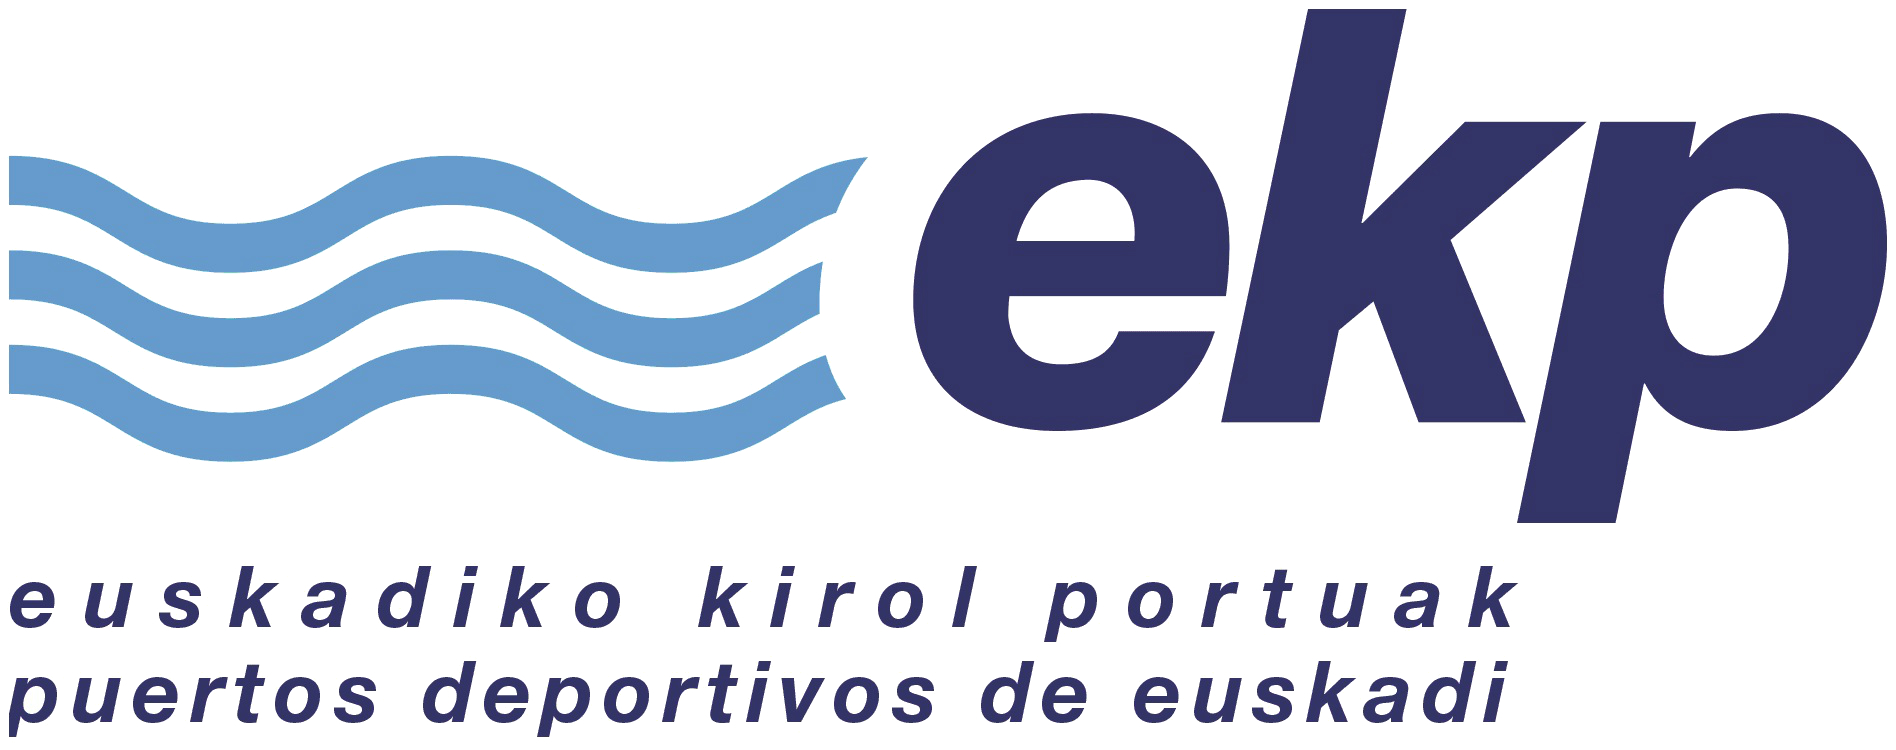 Puertdos Deportivos de Euskadi